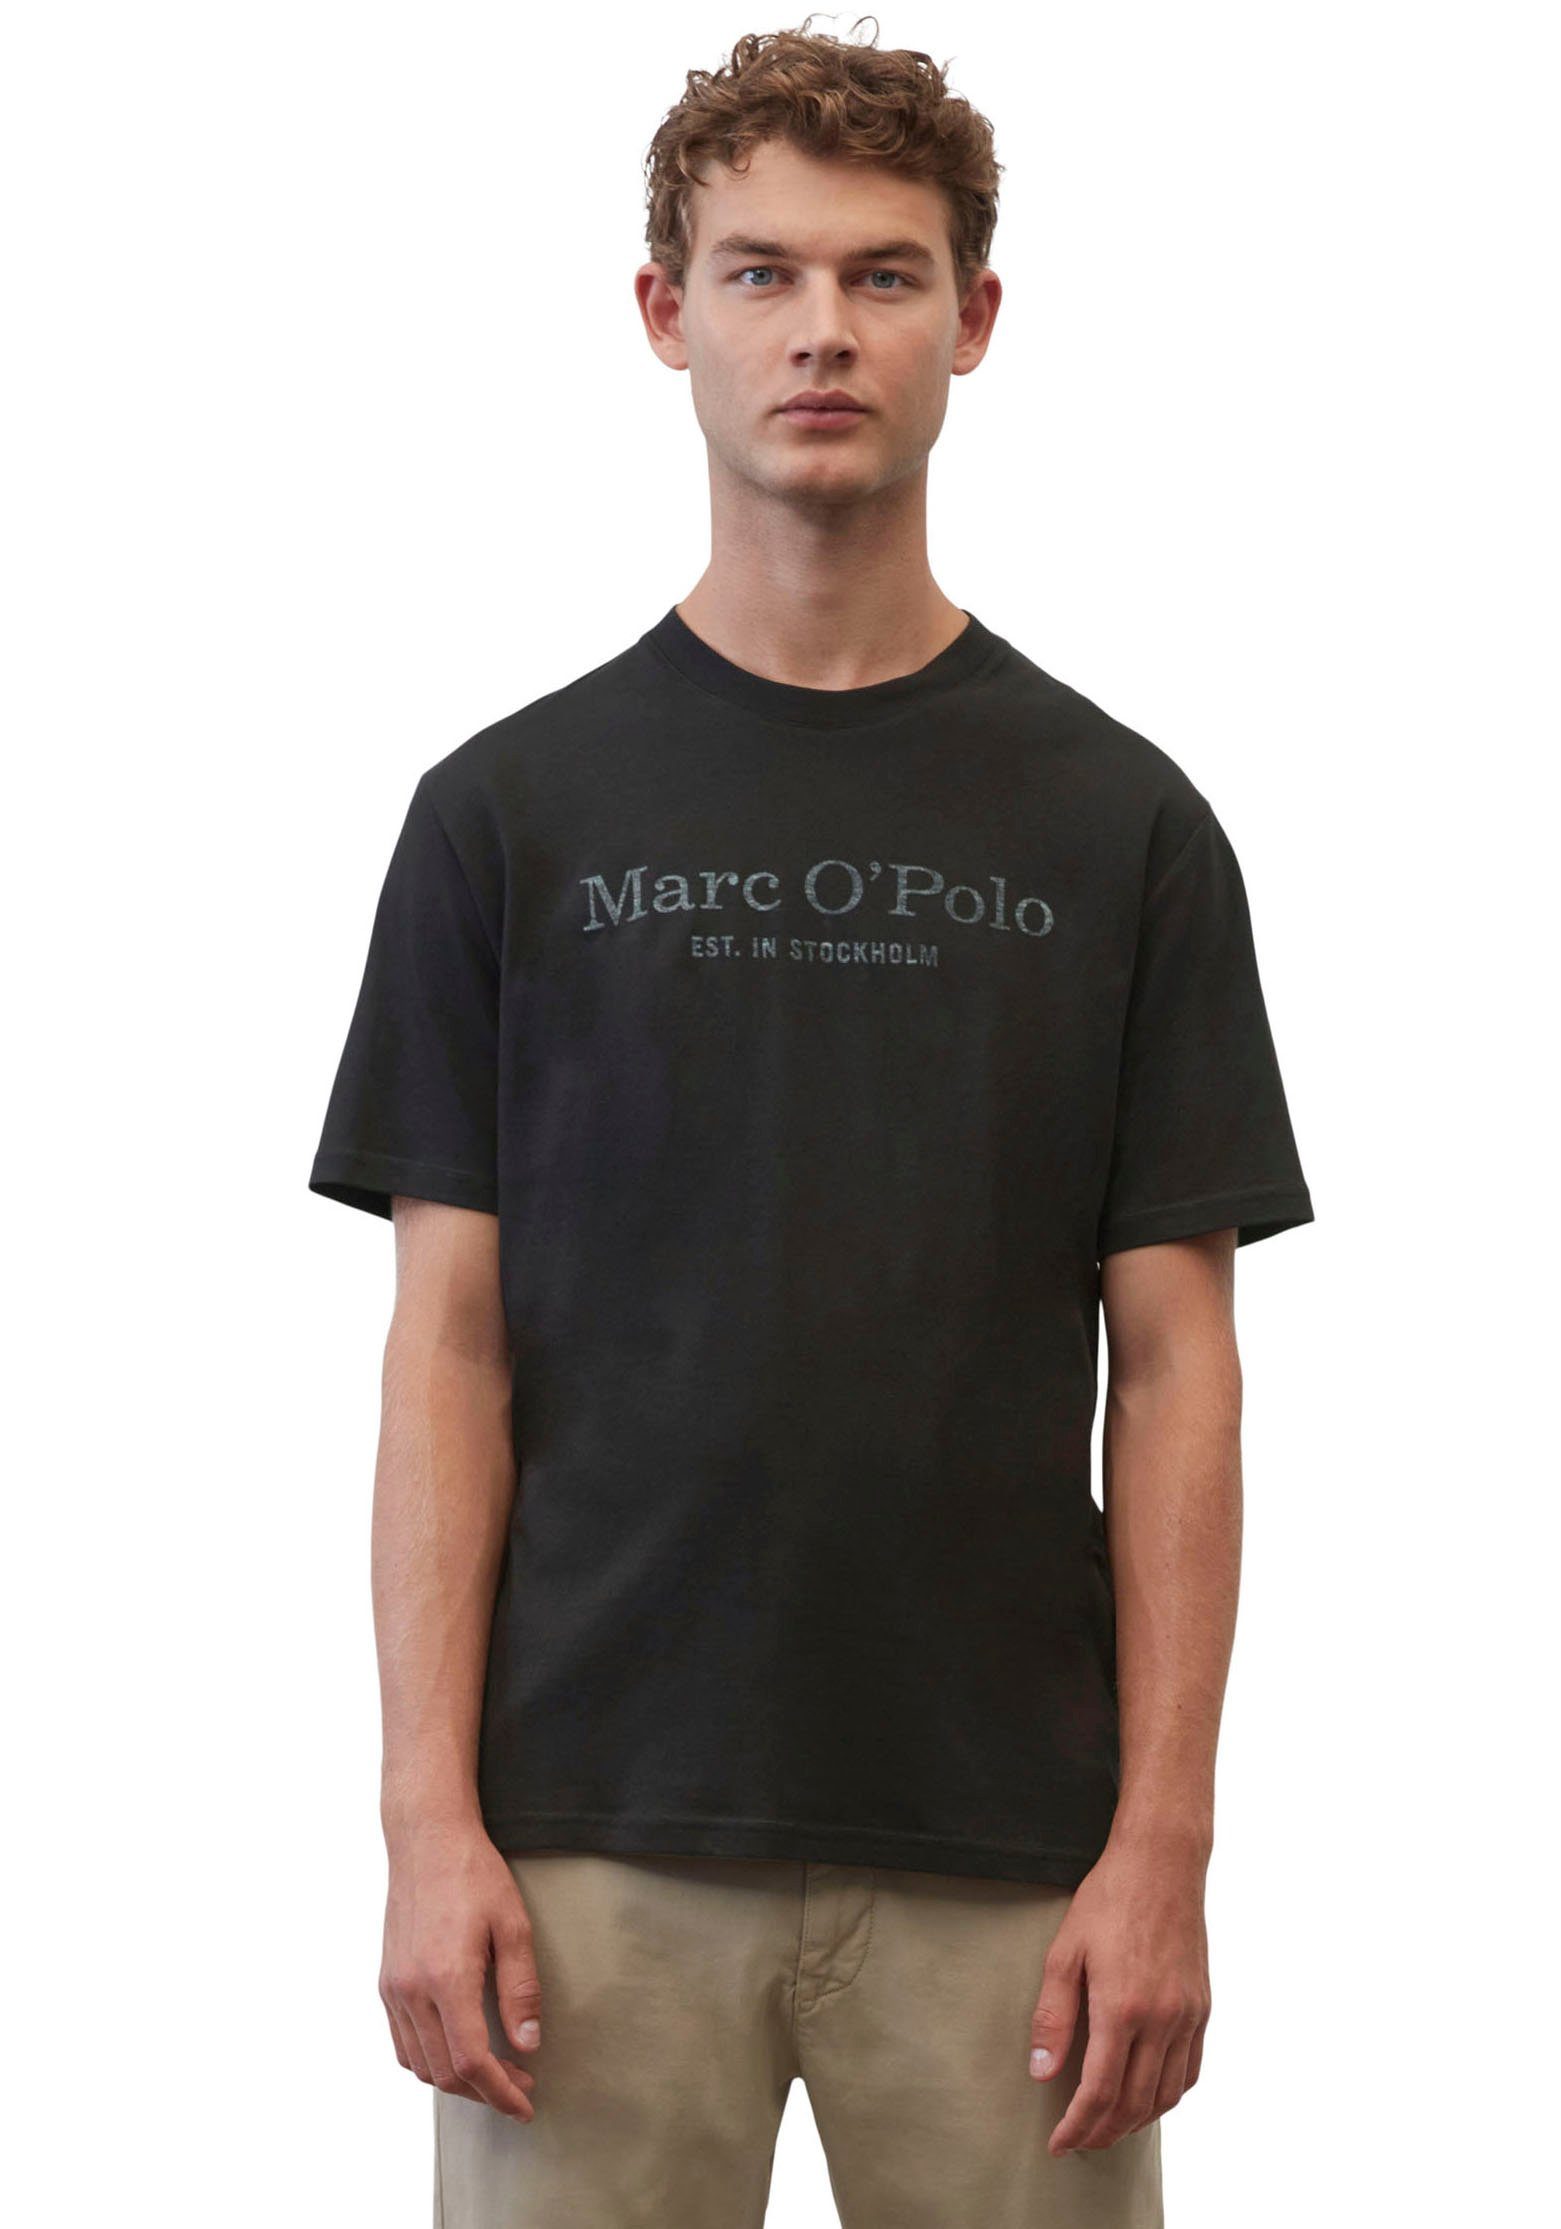 Marc O'Polo T-Shirt klassisches Logo-T-Shirt schwarz | T-Shirts